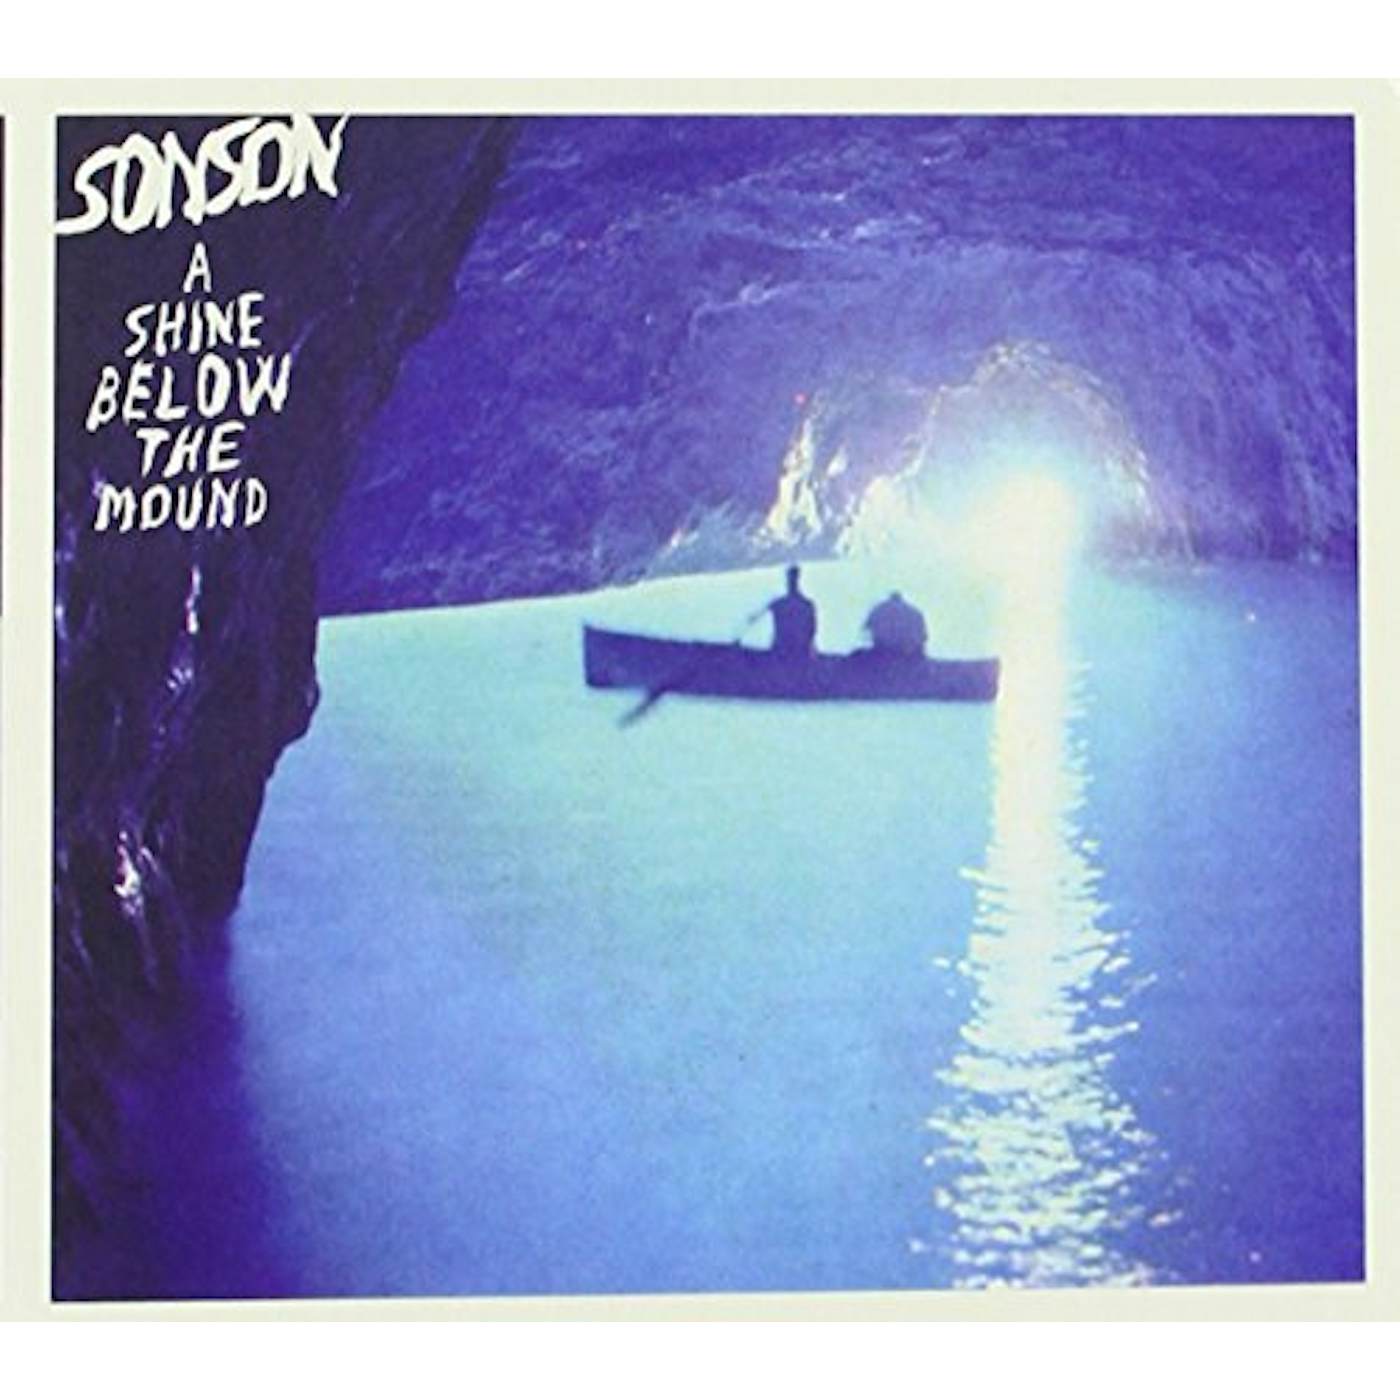 Sonson SHINE BELOW THE MOUND CD